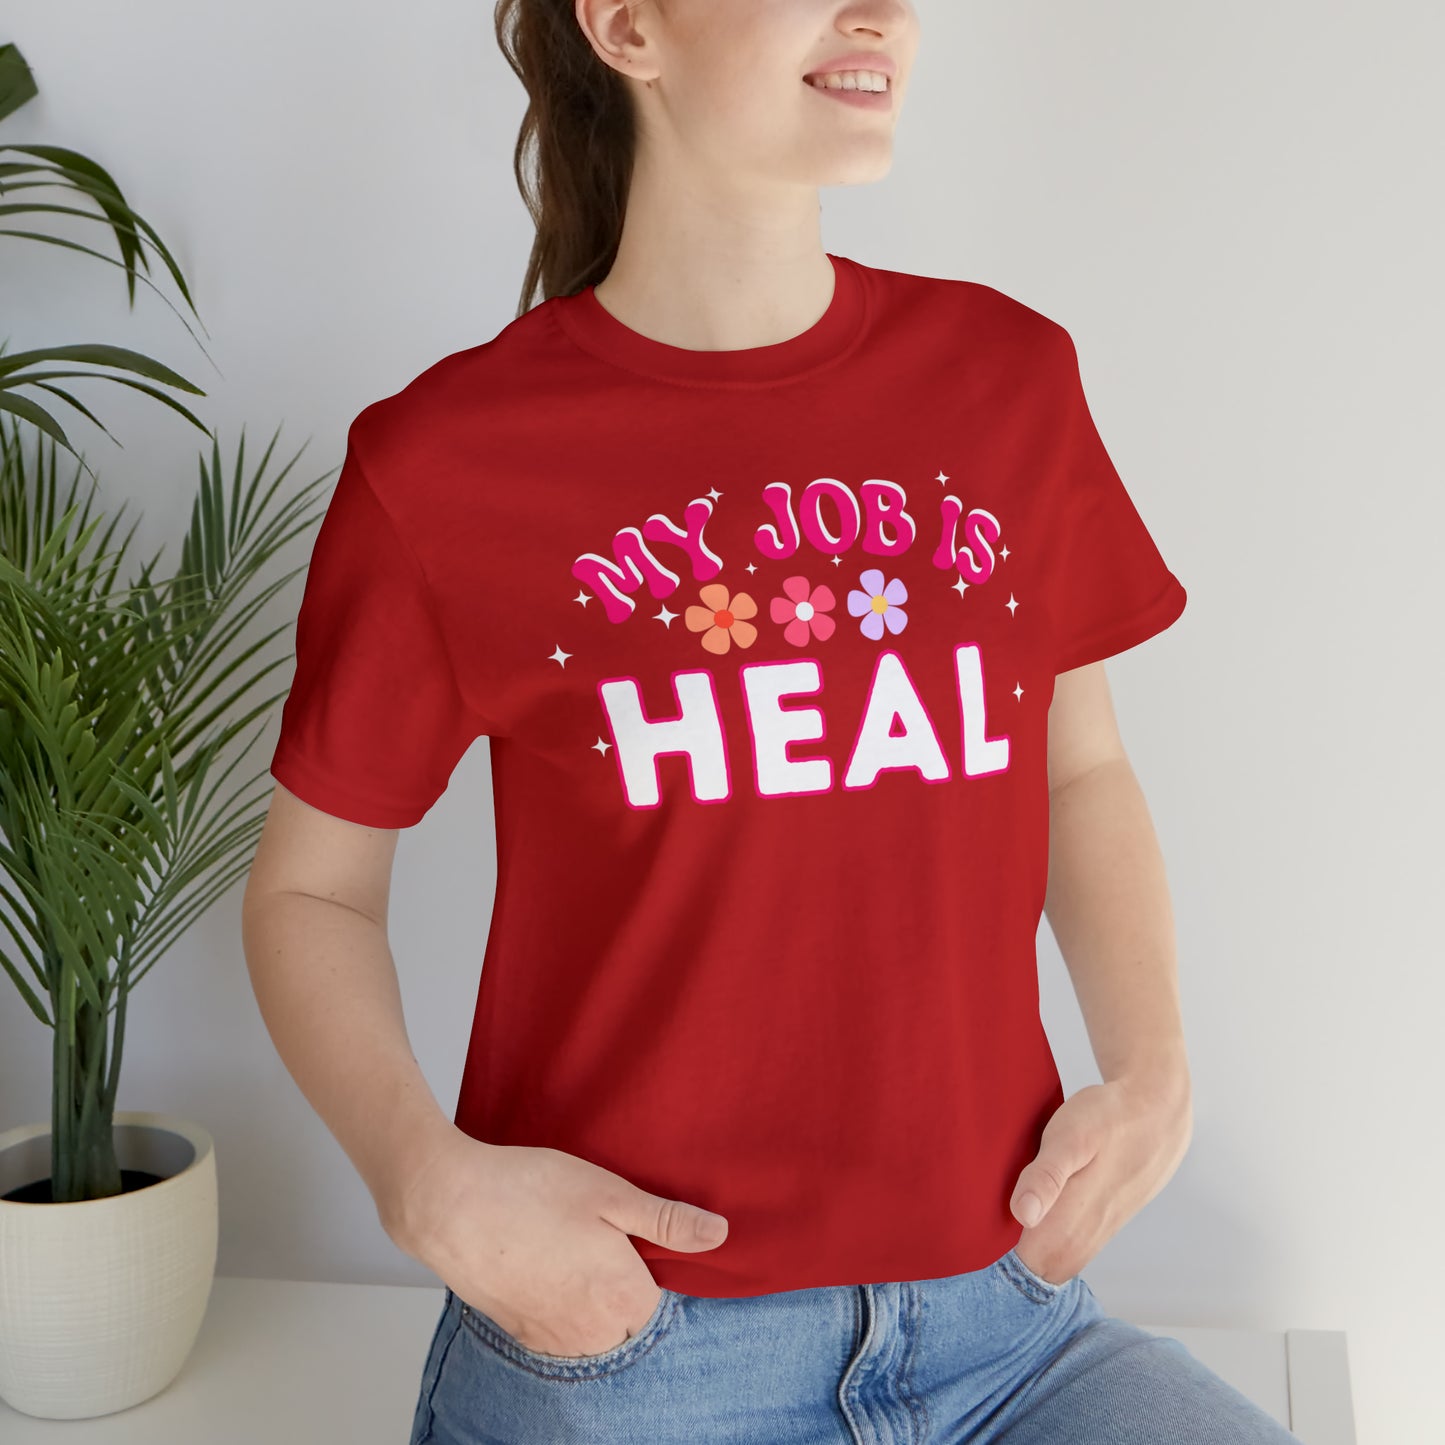 My Job is Heal Shirt Doctor Shirt  Nurse Shirt